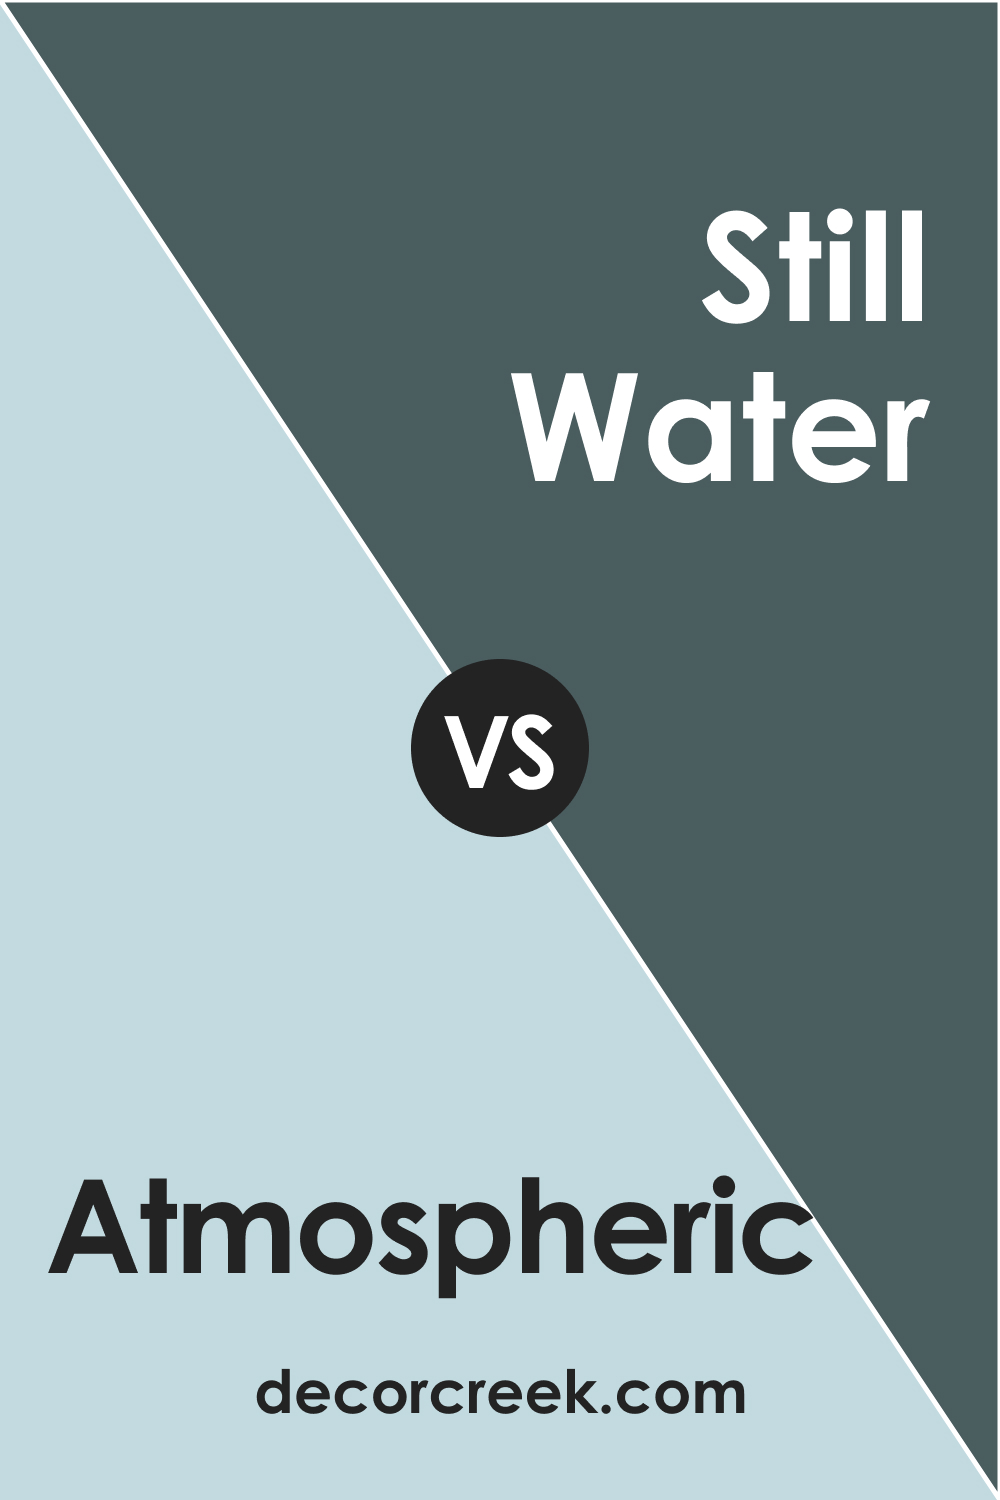 Atmospheric vs Still Water